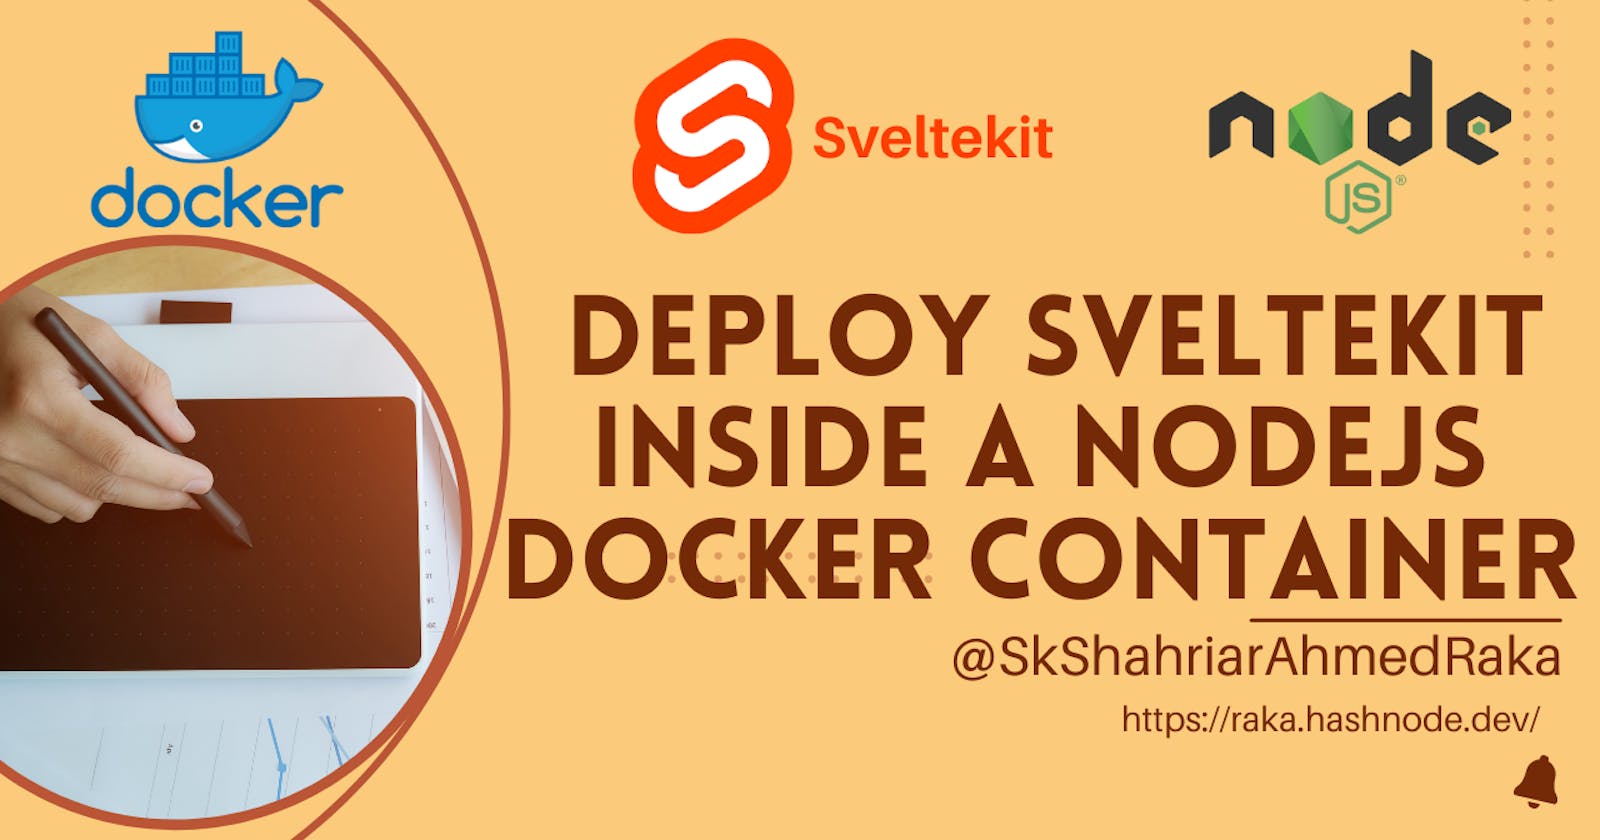 Create and Deploy Sveltekit inside a Nodejs Docker Container